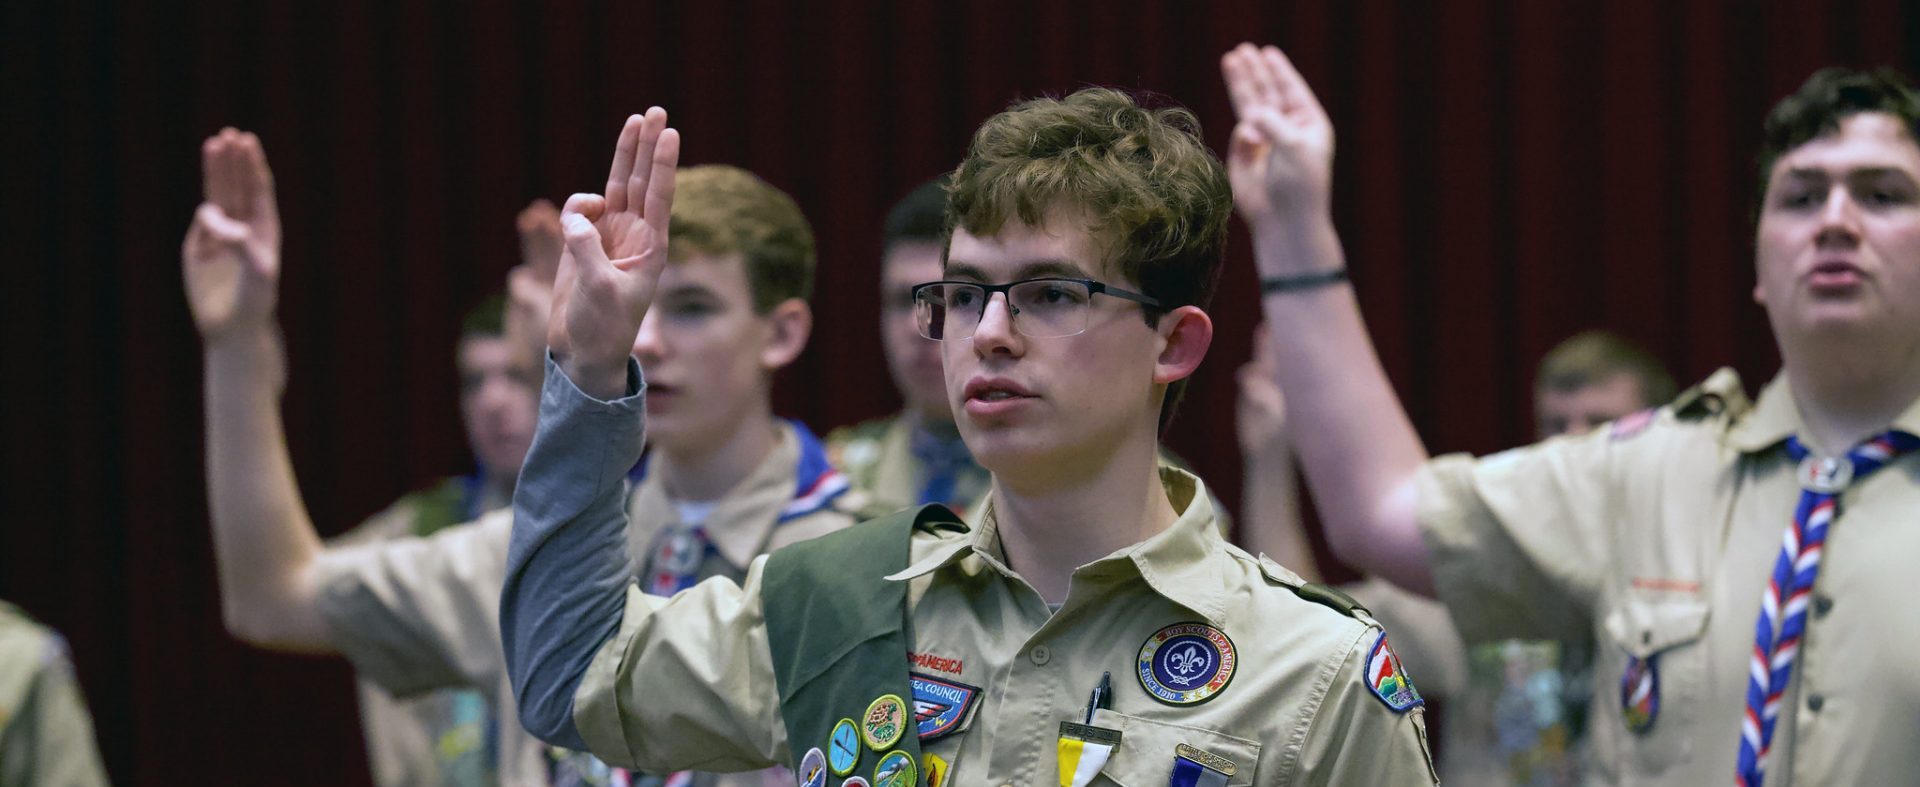 Scouts taking the oath